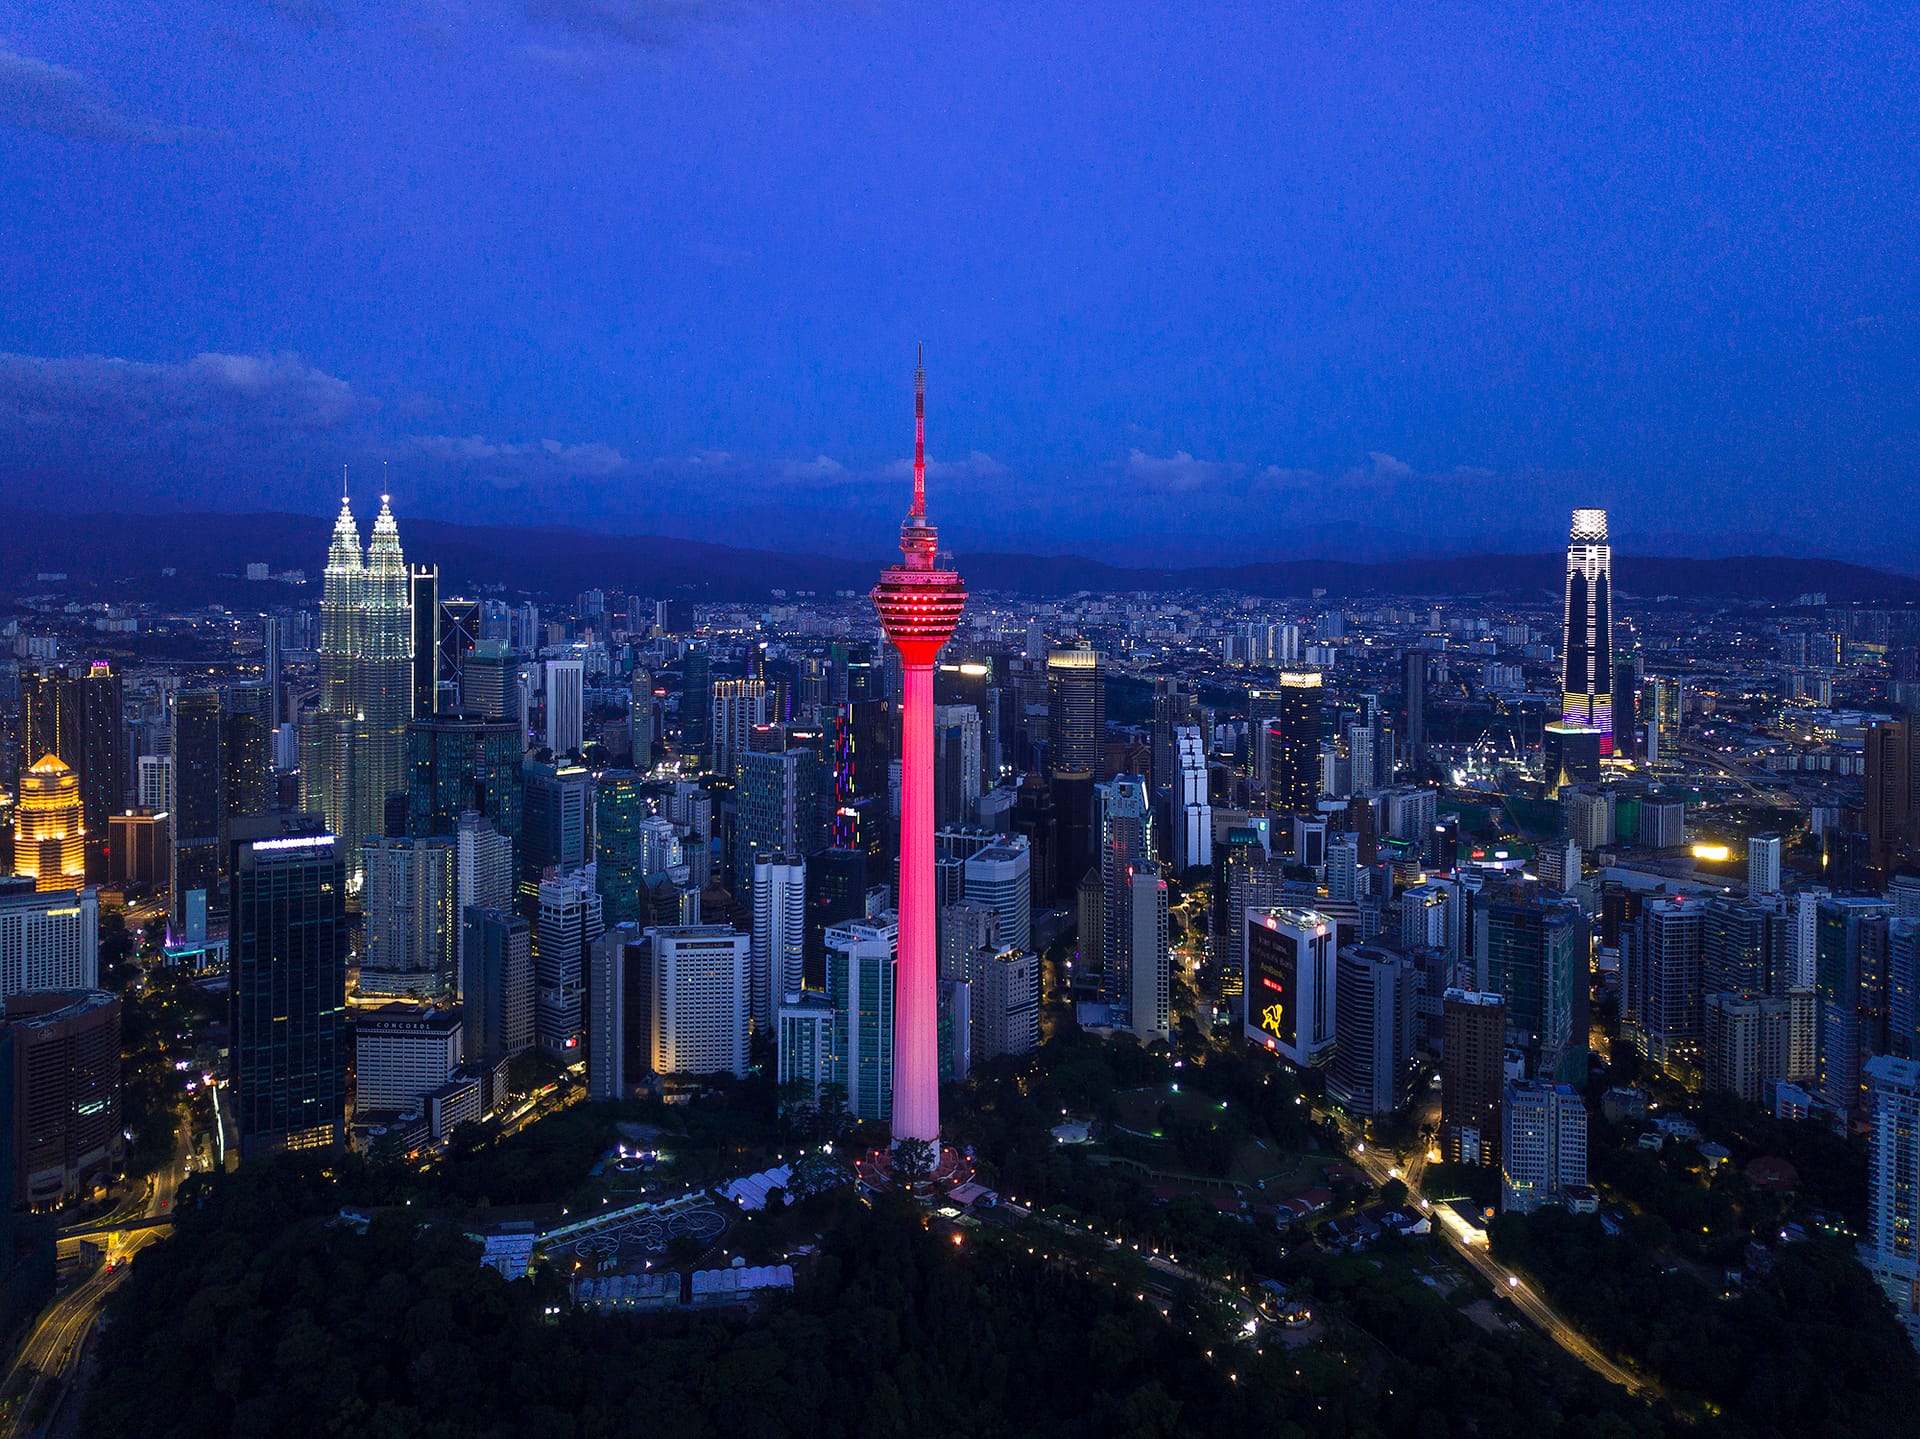 KL Tower, Kuala Lumpur, Malaysia by heartpatrick